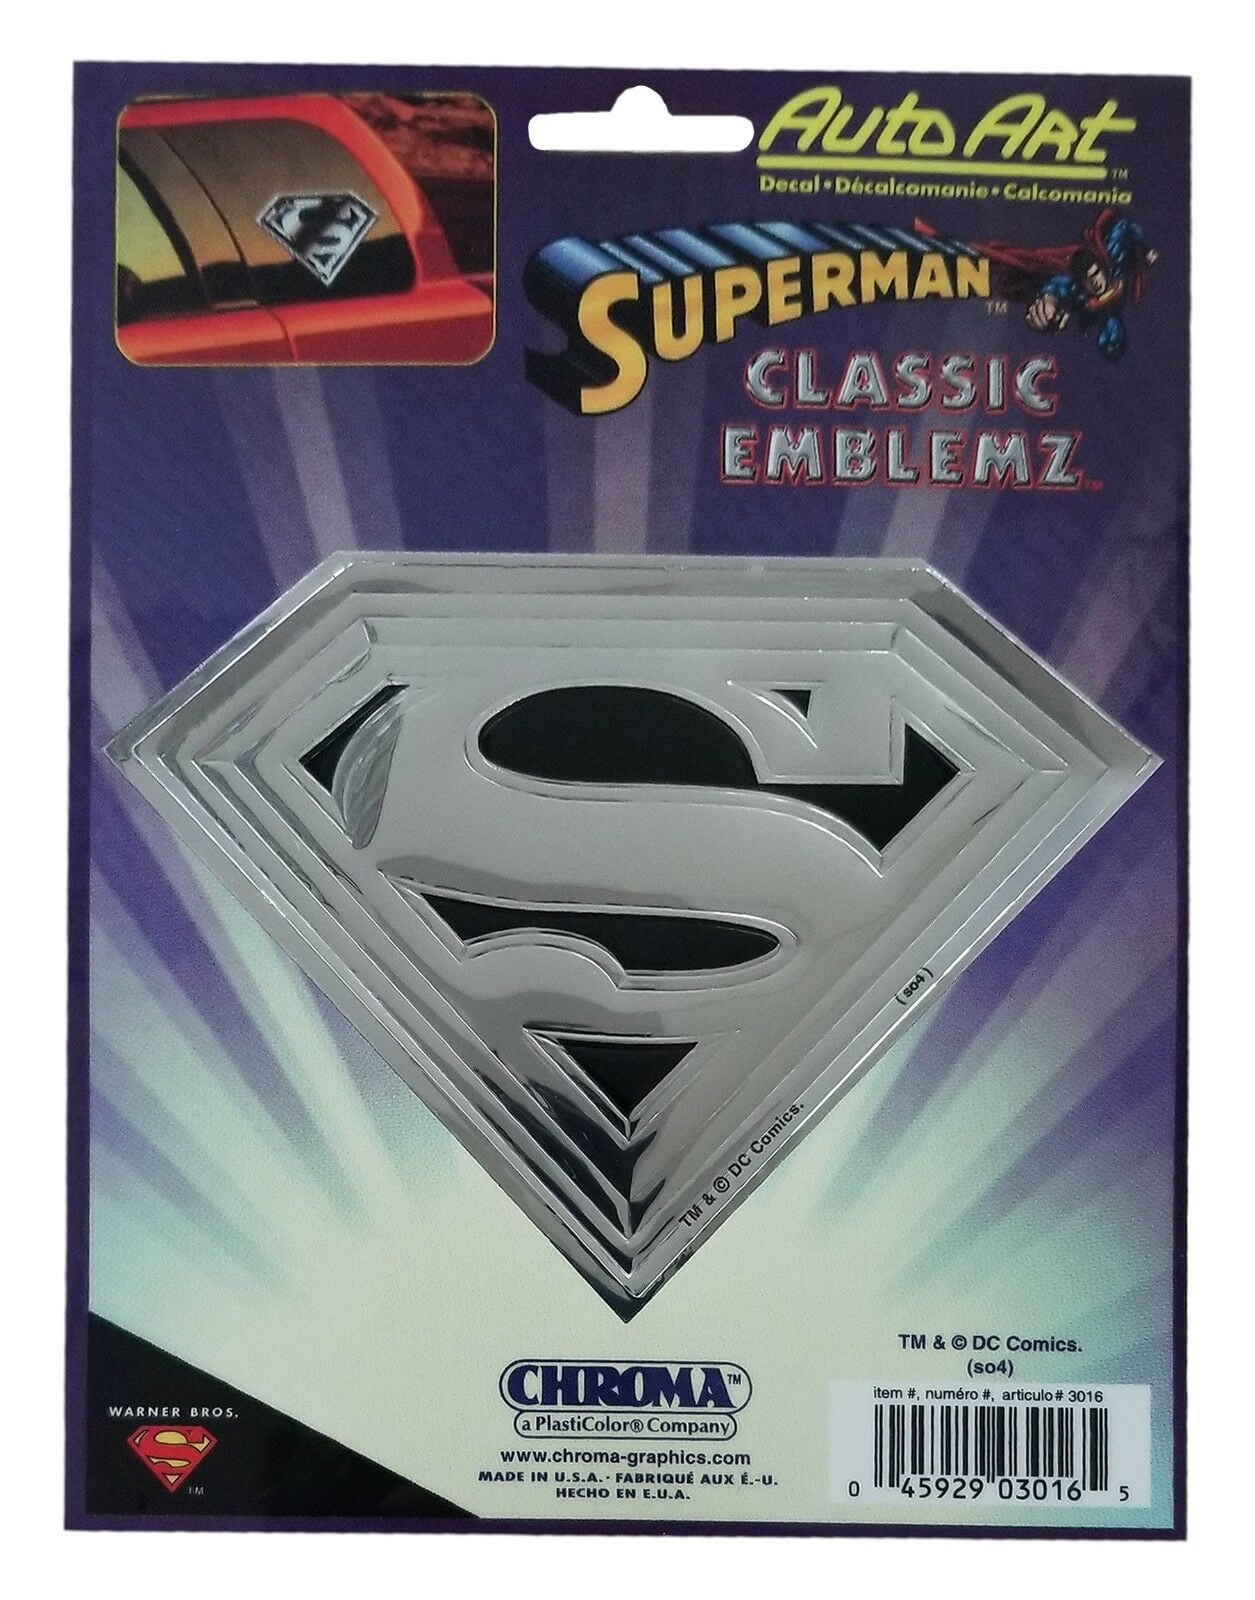 Chroma Graphics 3016 Classic Emblemz 3 piece Superman Decal